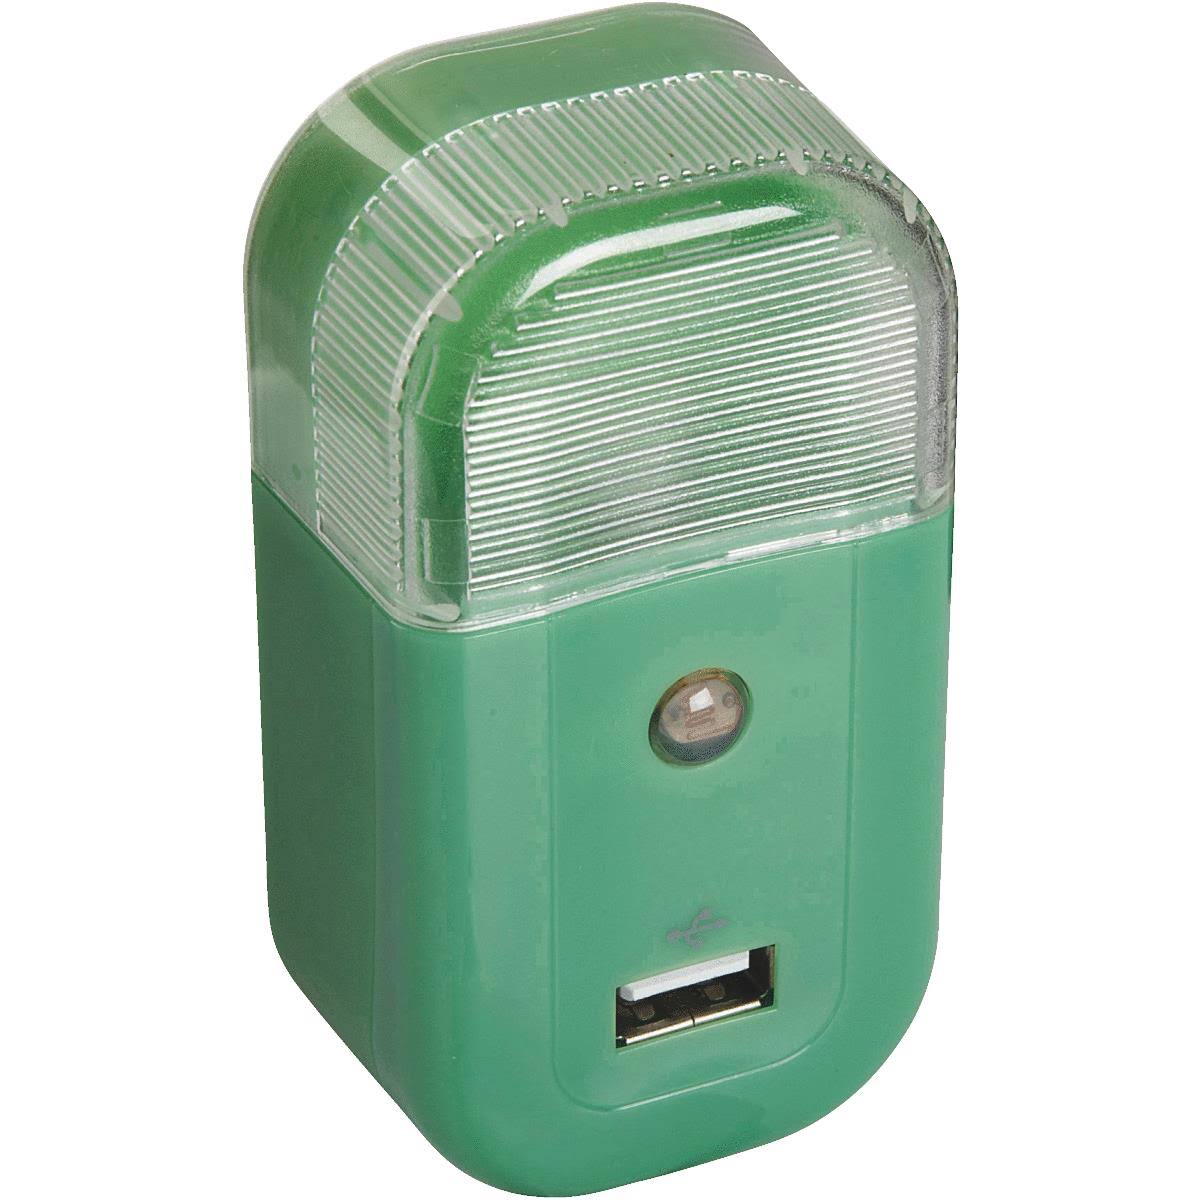 RCA USB Nightlight Charger - USBNL4R Green